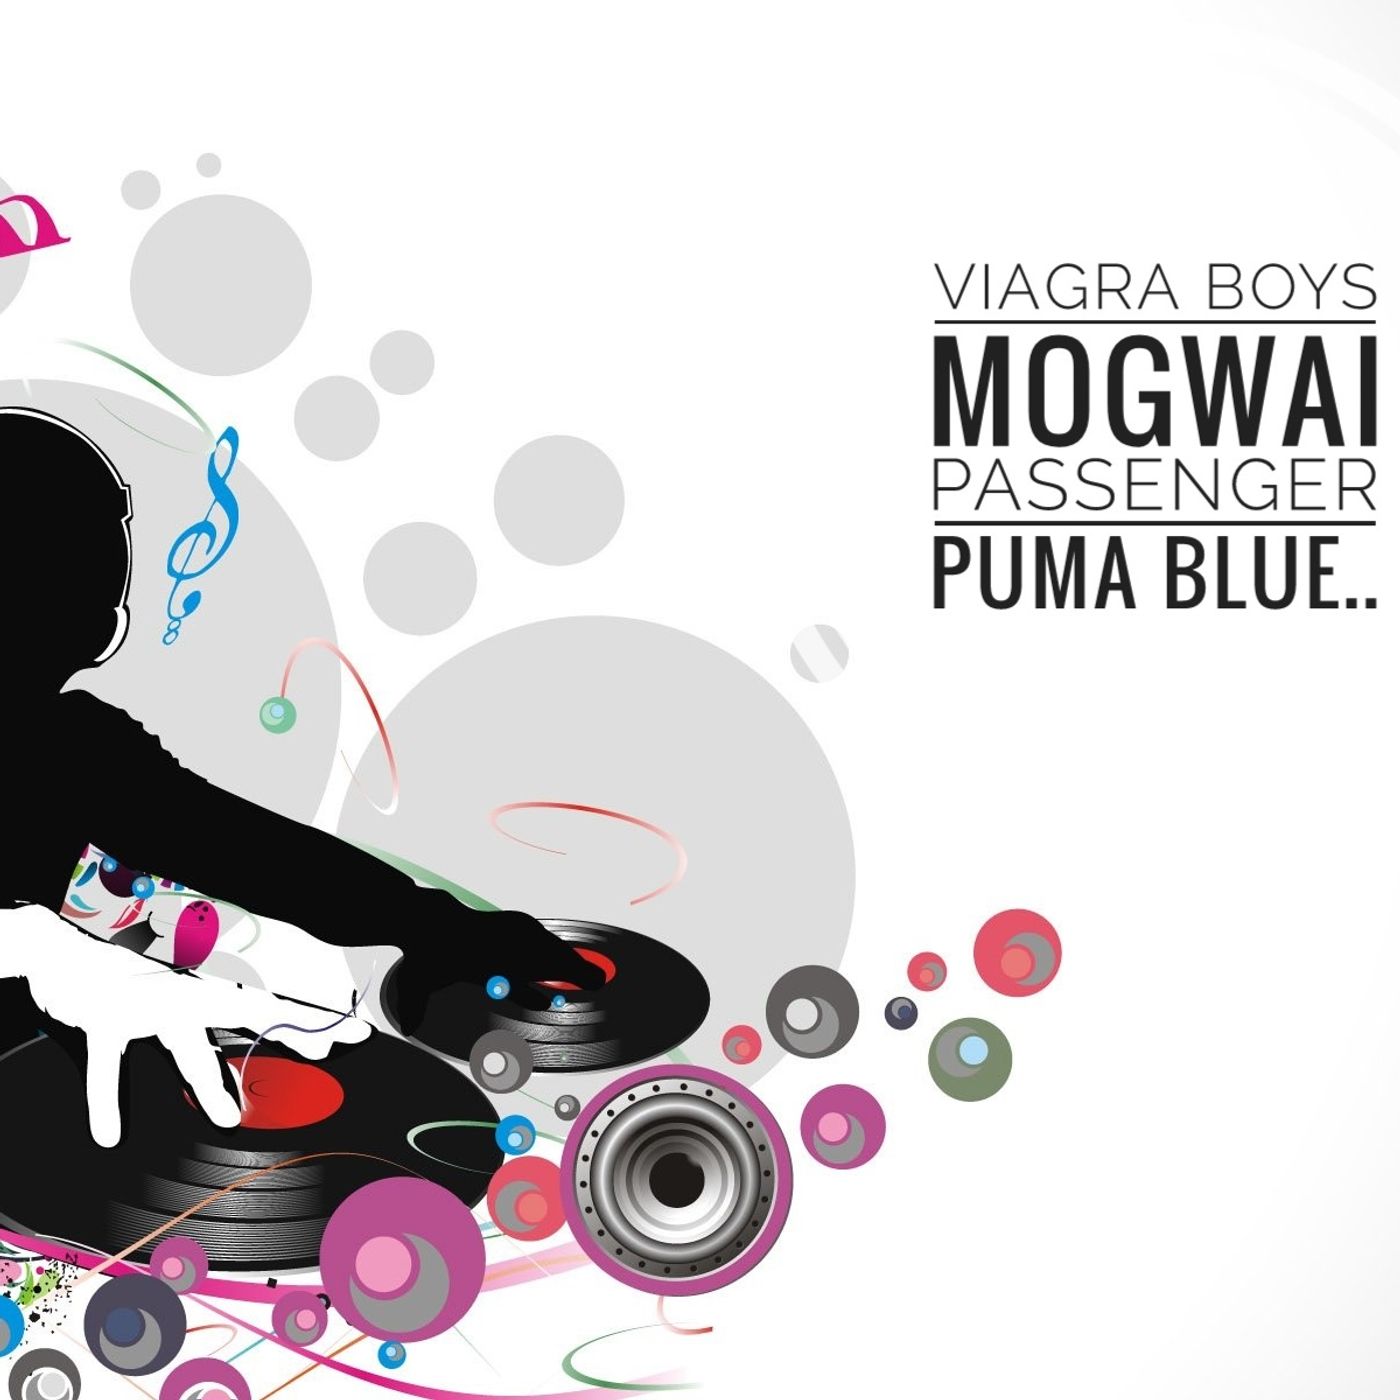 Mogwai, Viagra Boys, Passenger, Puma Blue + [Visioni] Il Minimalismo - Propaganda s4e16